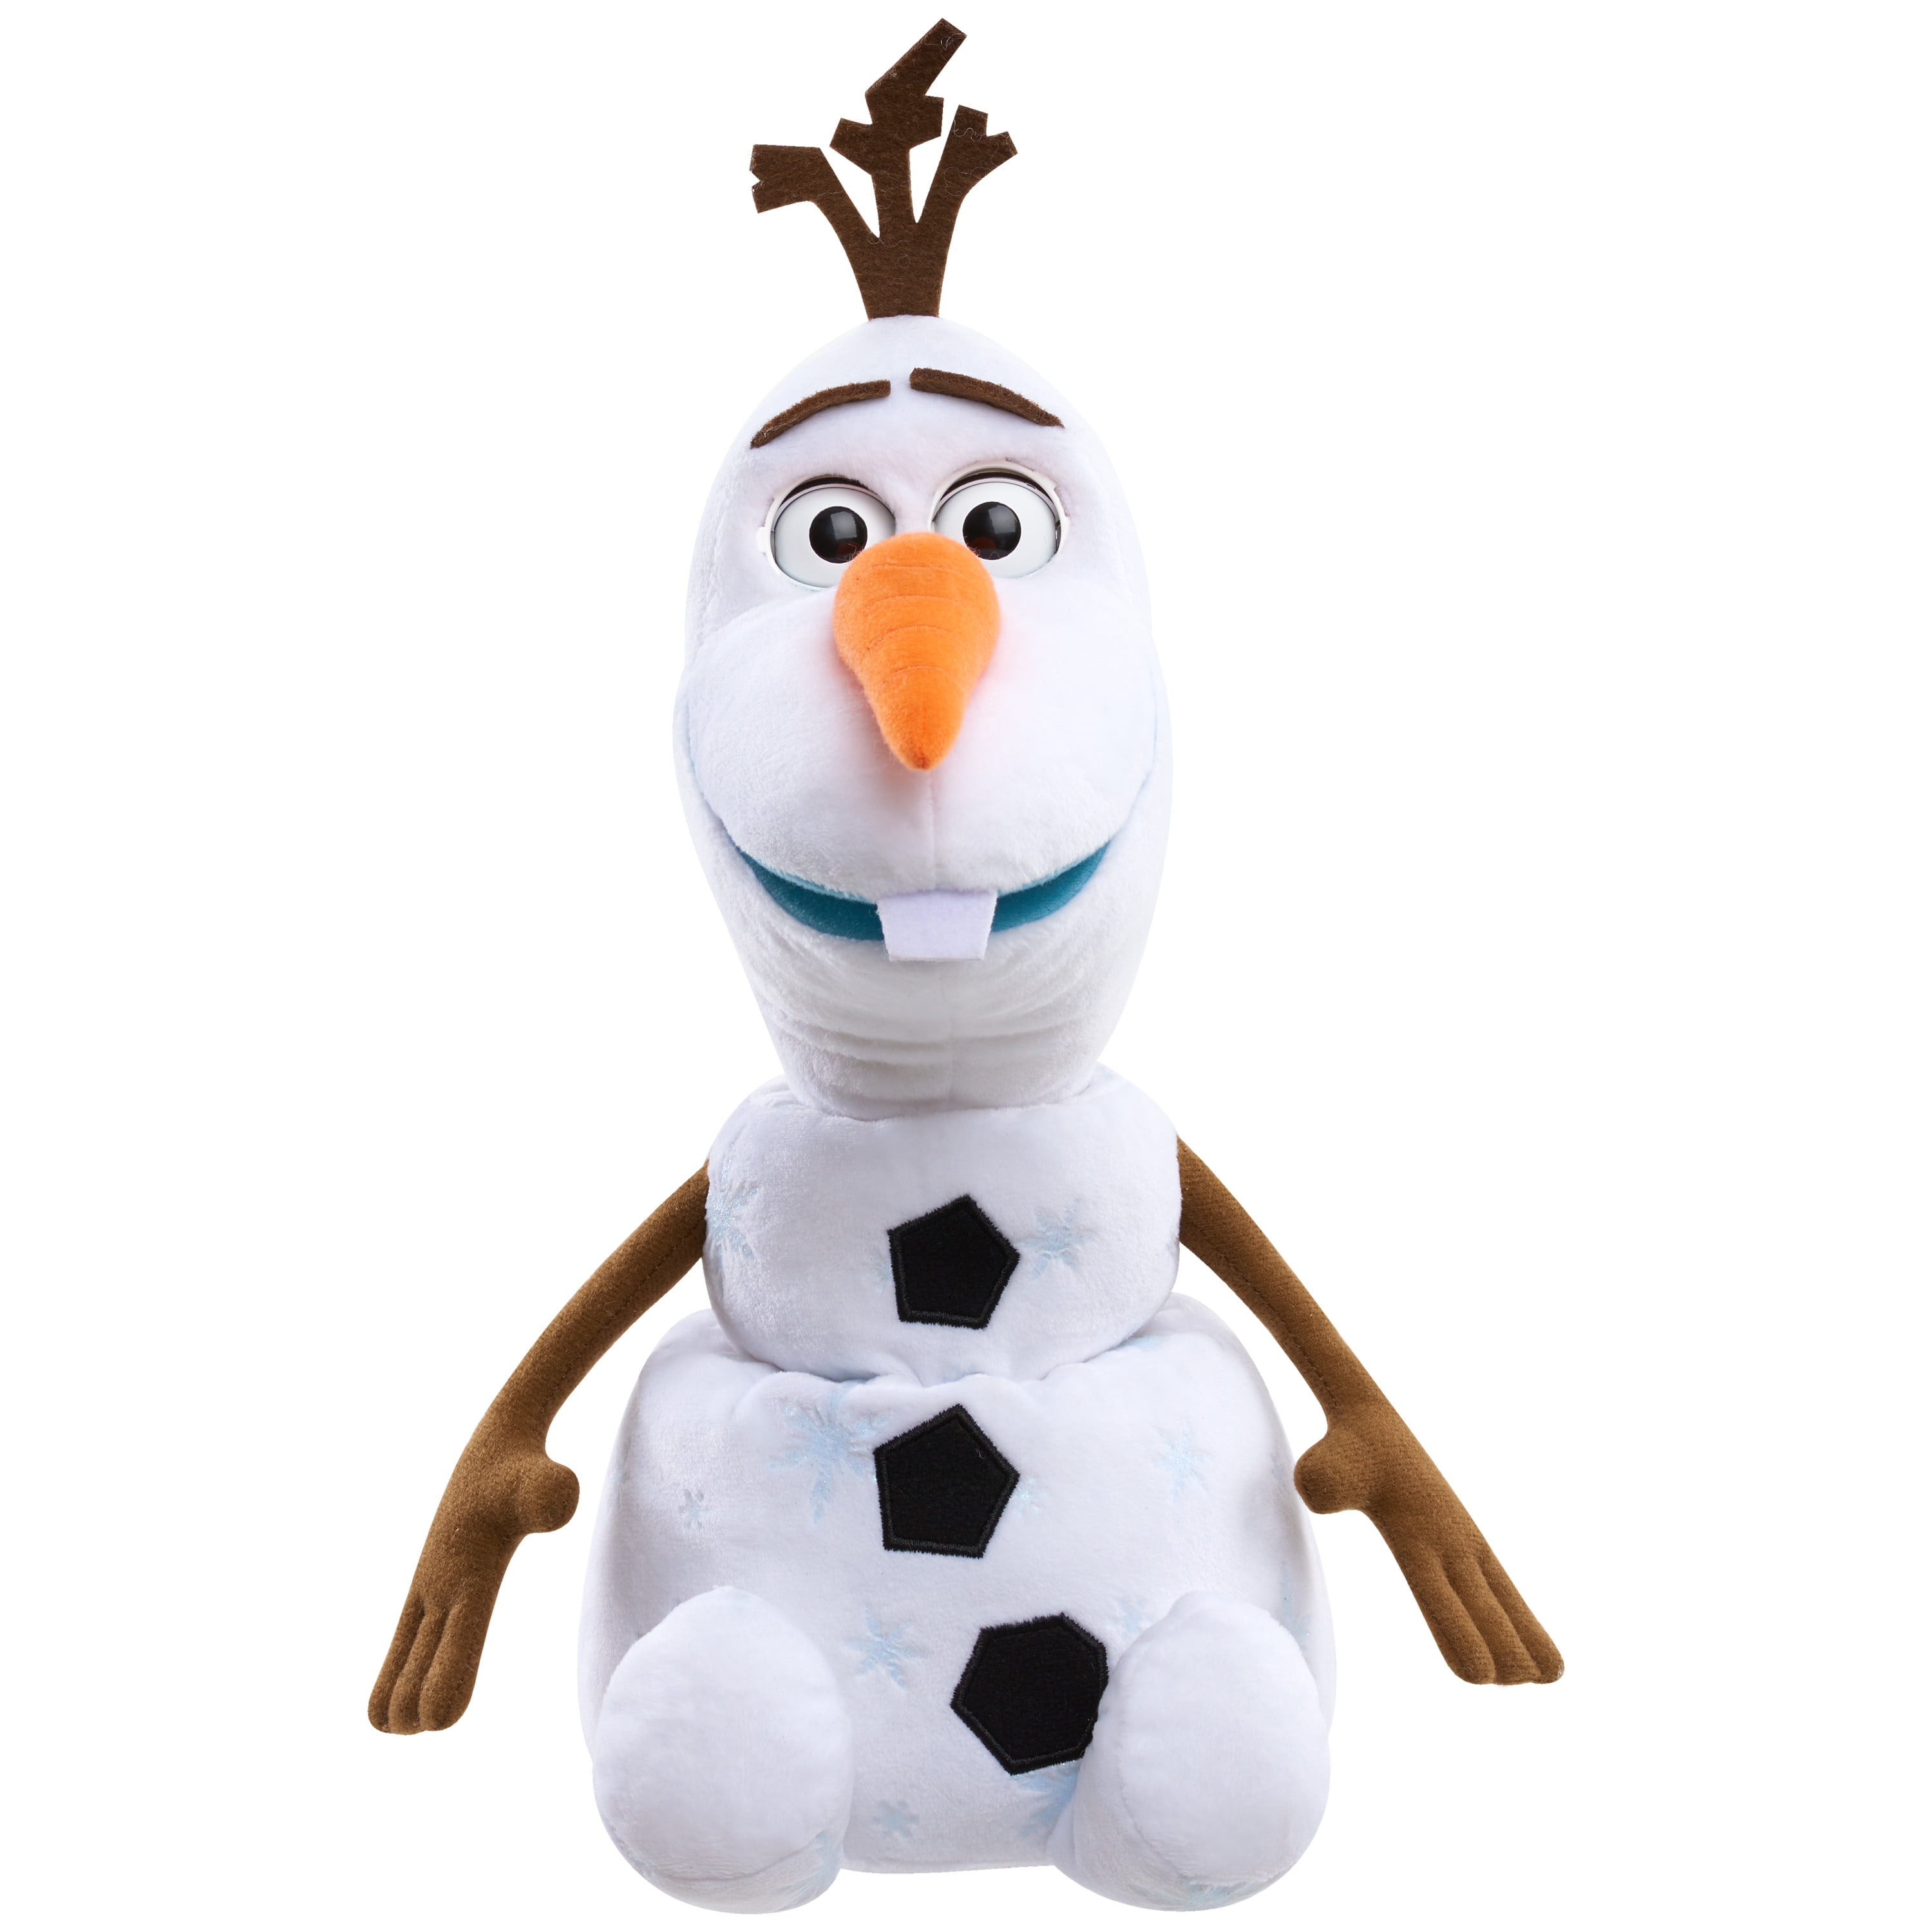 2019 Ty Beanie Babies Disney Sparkle Olaf Frozen 2 Movie 6" Tall for sale online 